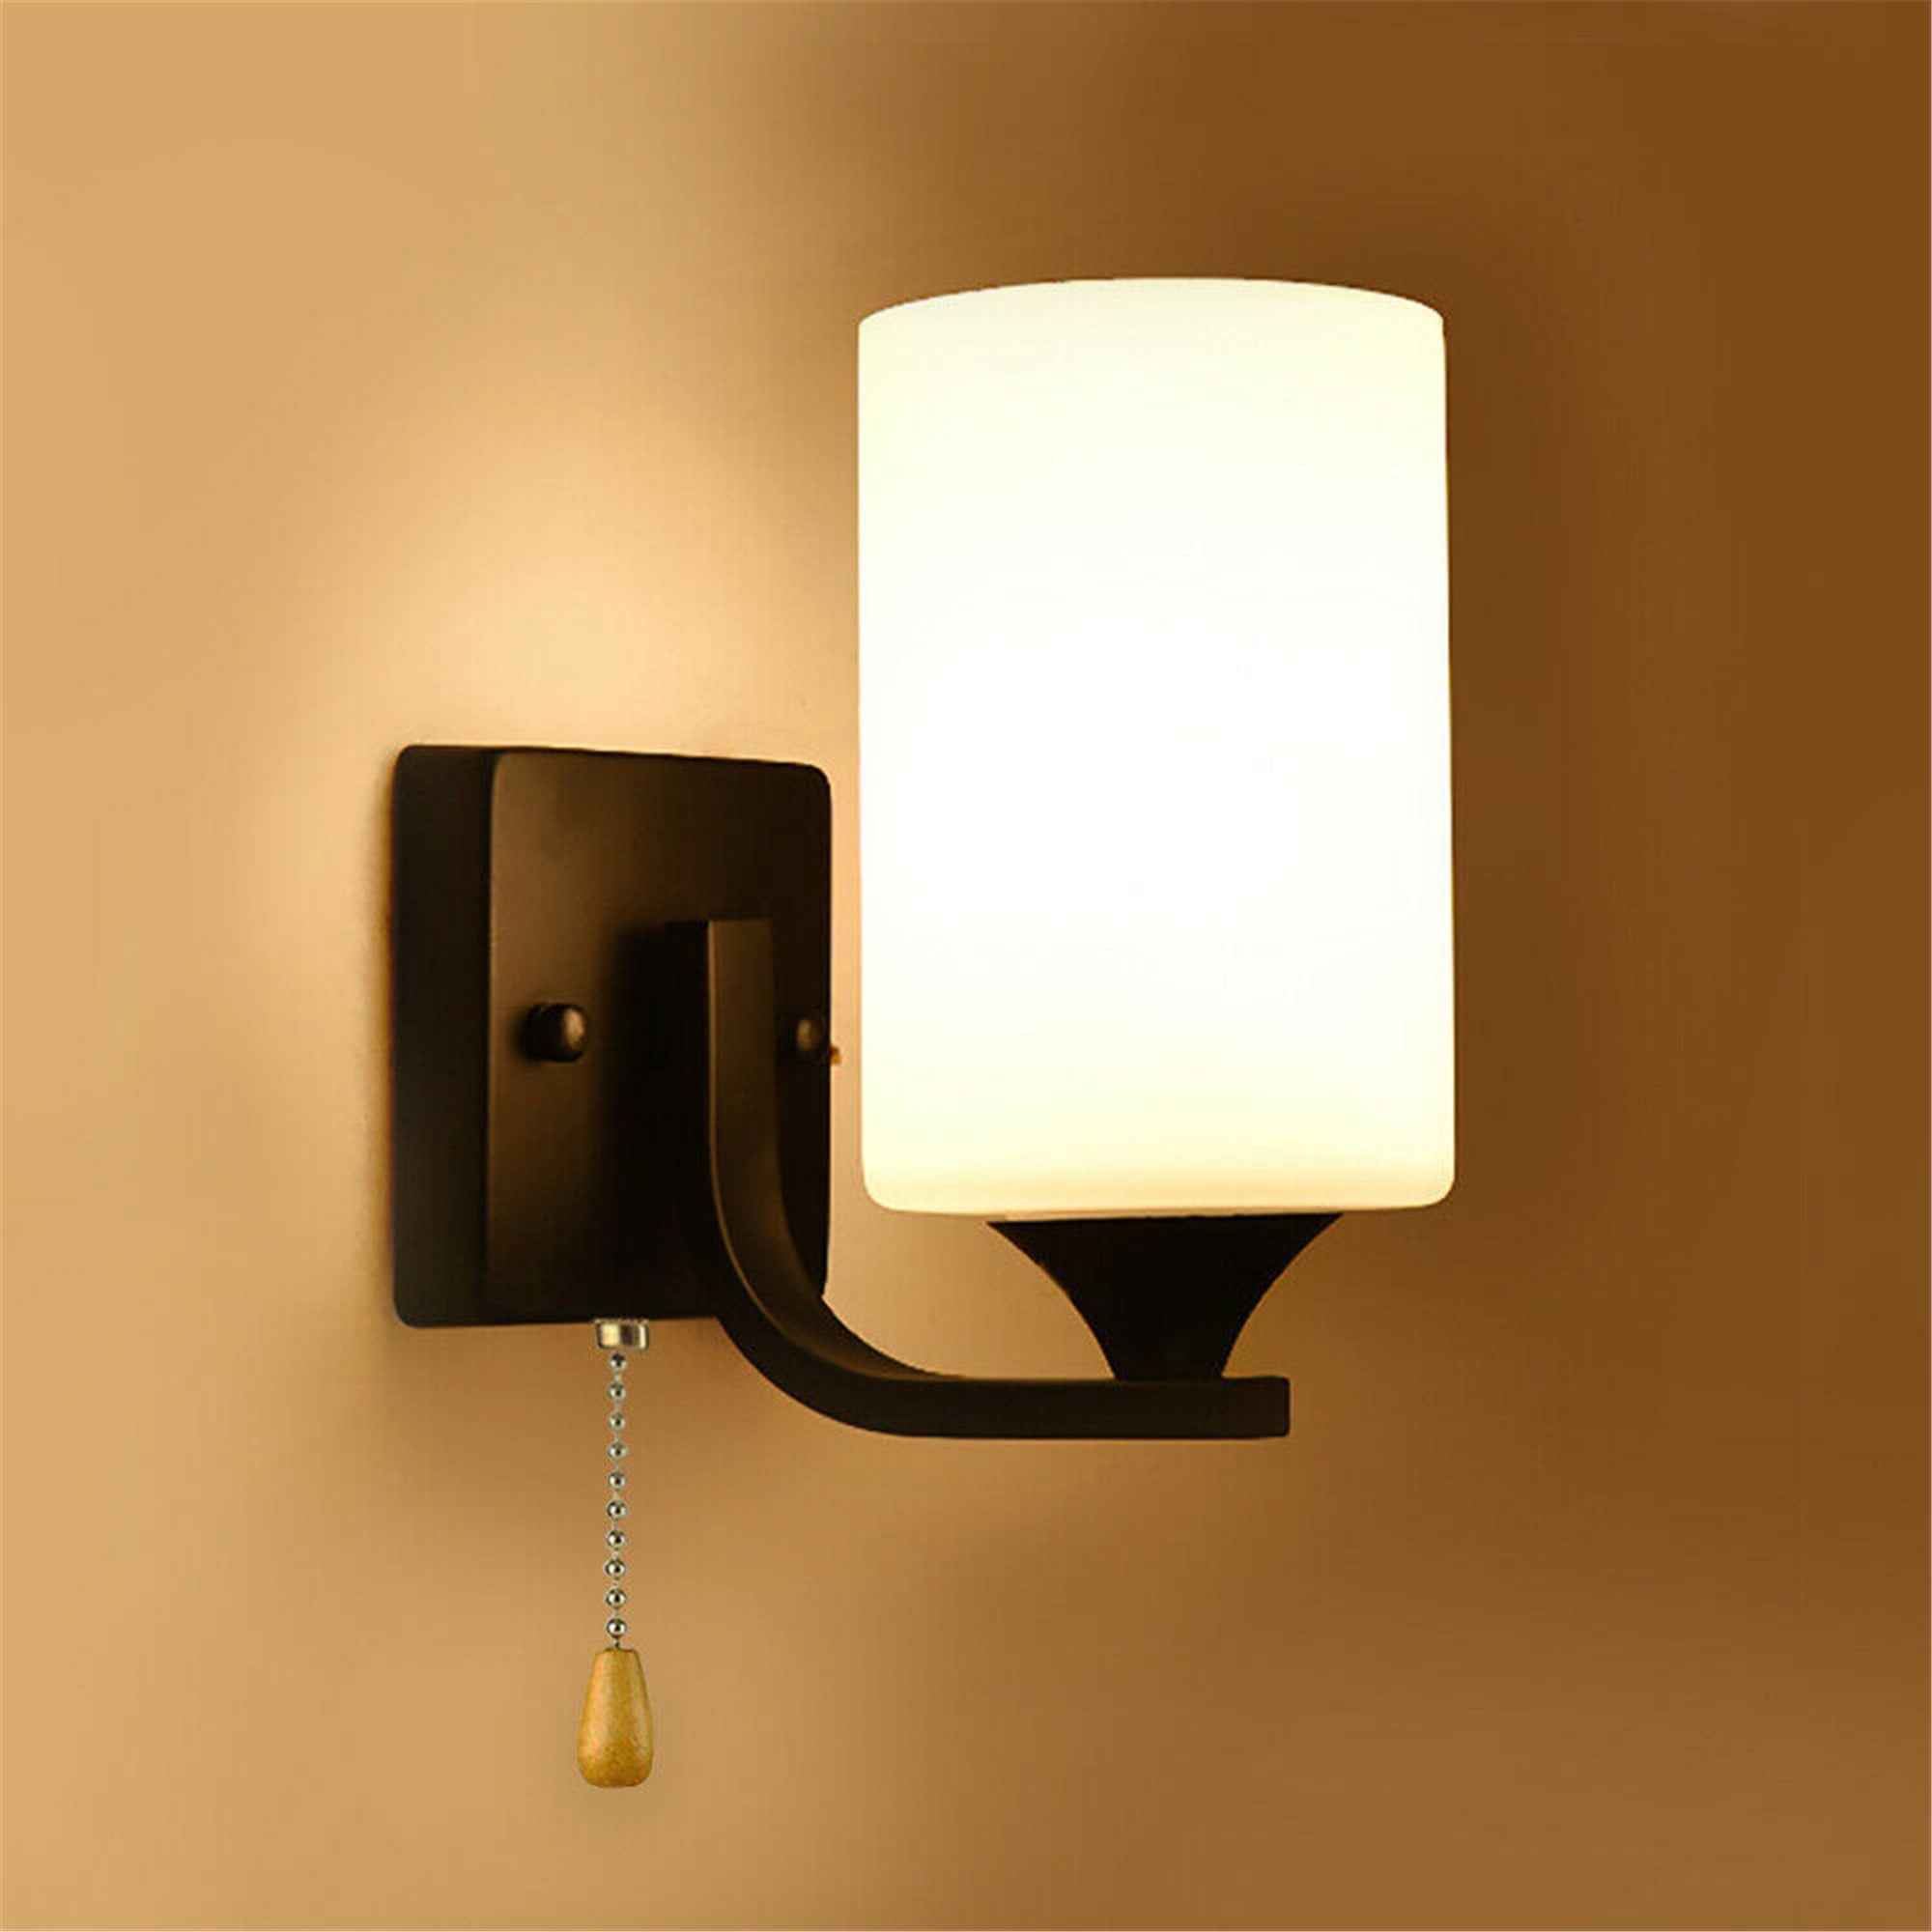 Single LED Light Wall Sconce Lamp E26 Glass Lighting Fixture Indoor 